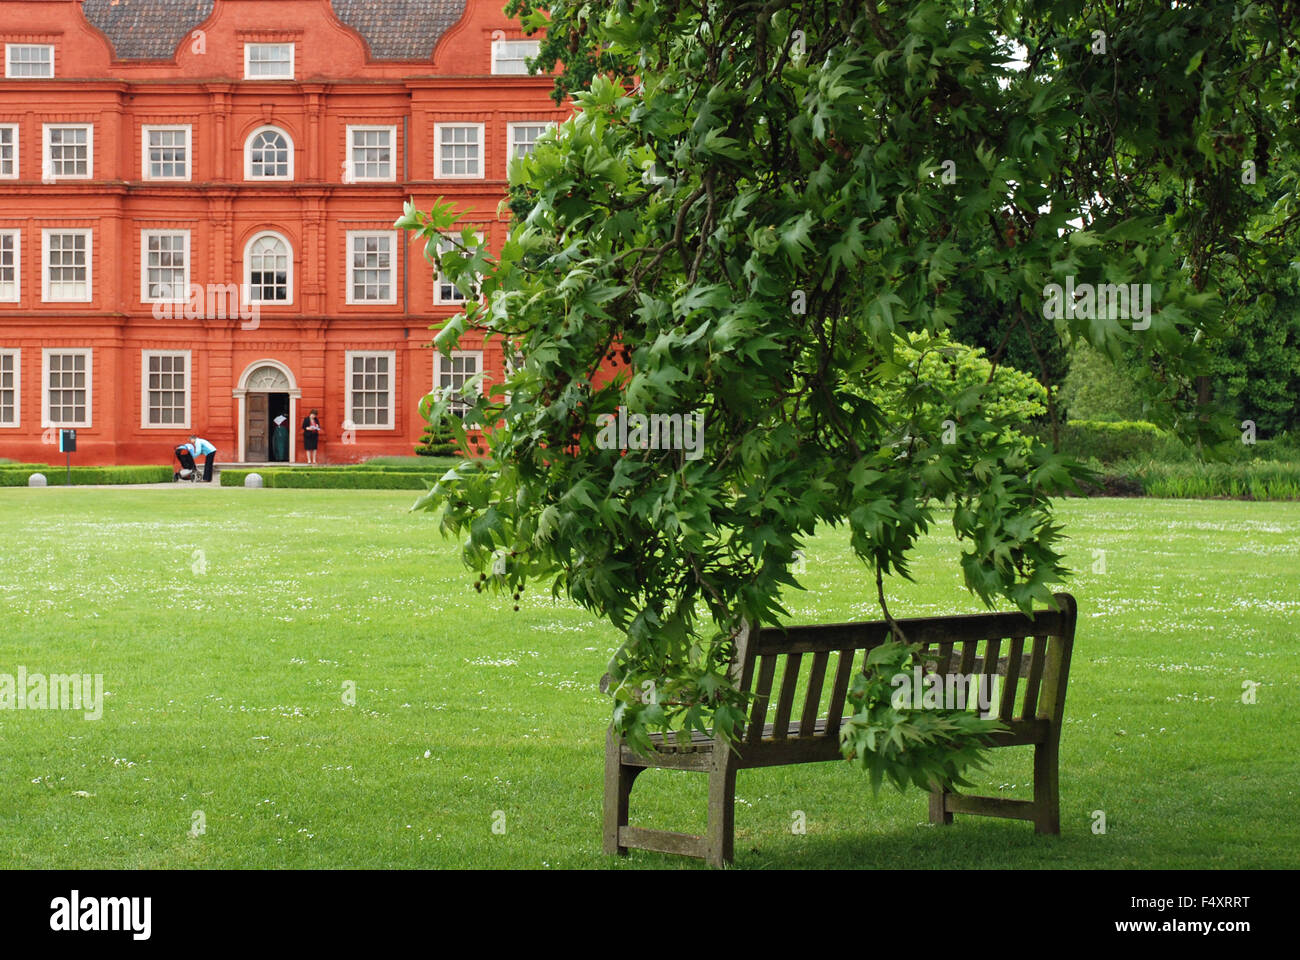 Gartenbank außerhalb Kew Palace verdeckt durch belaubte Äste in Kew Botanical Gardens, London, England Stockfoto